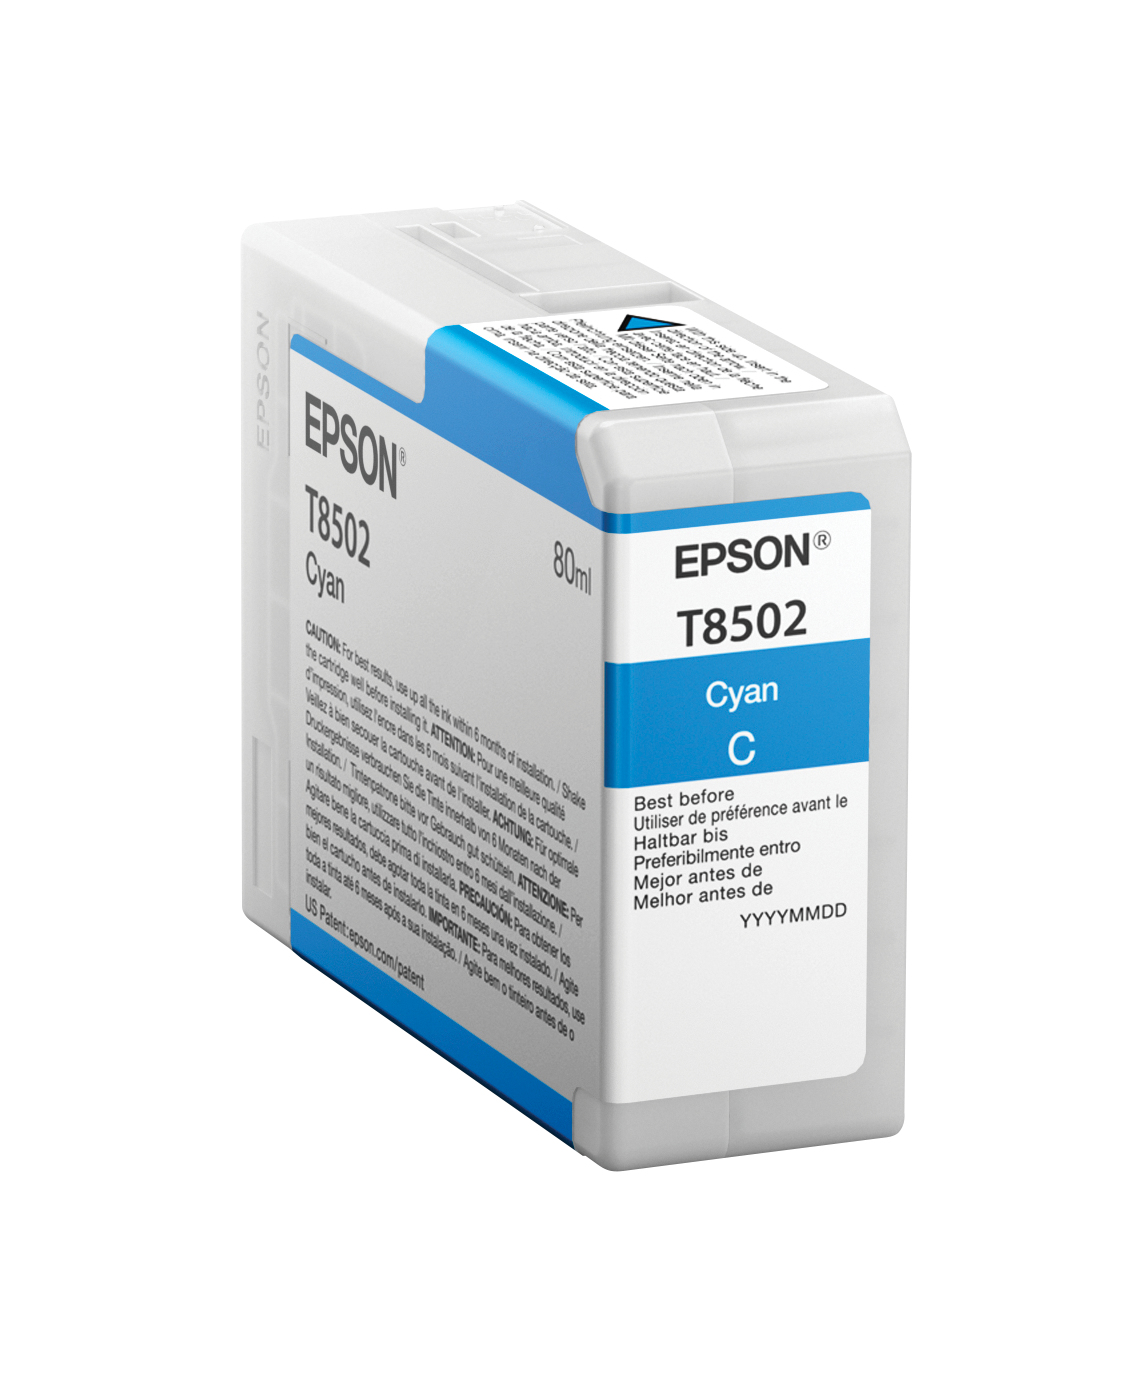 Epson T850200 ink cartridge Original Cyan 1 pcs